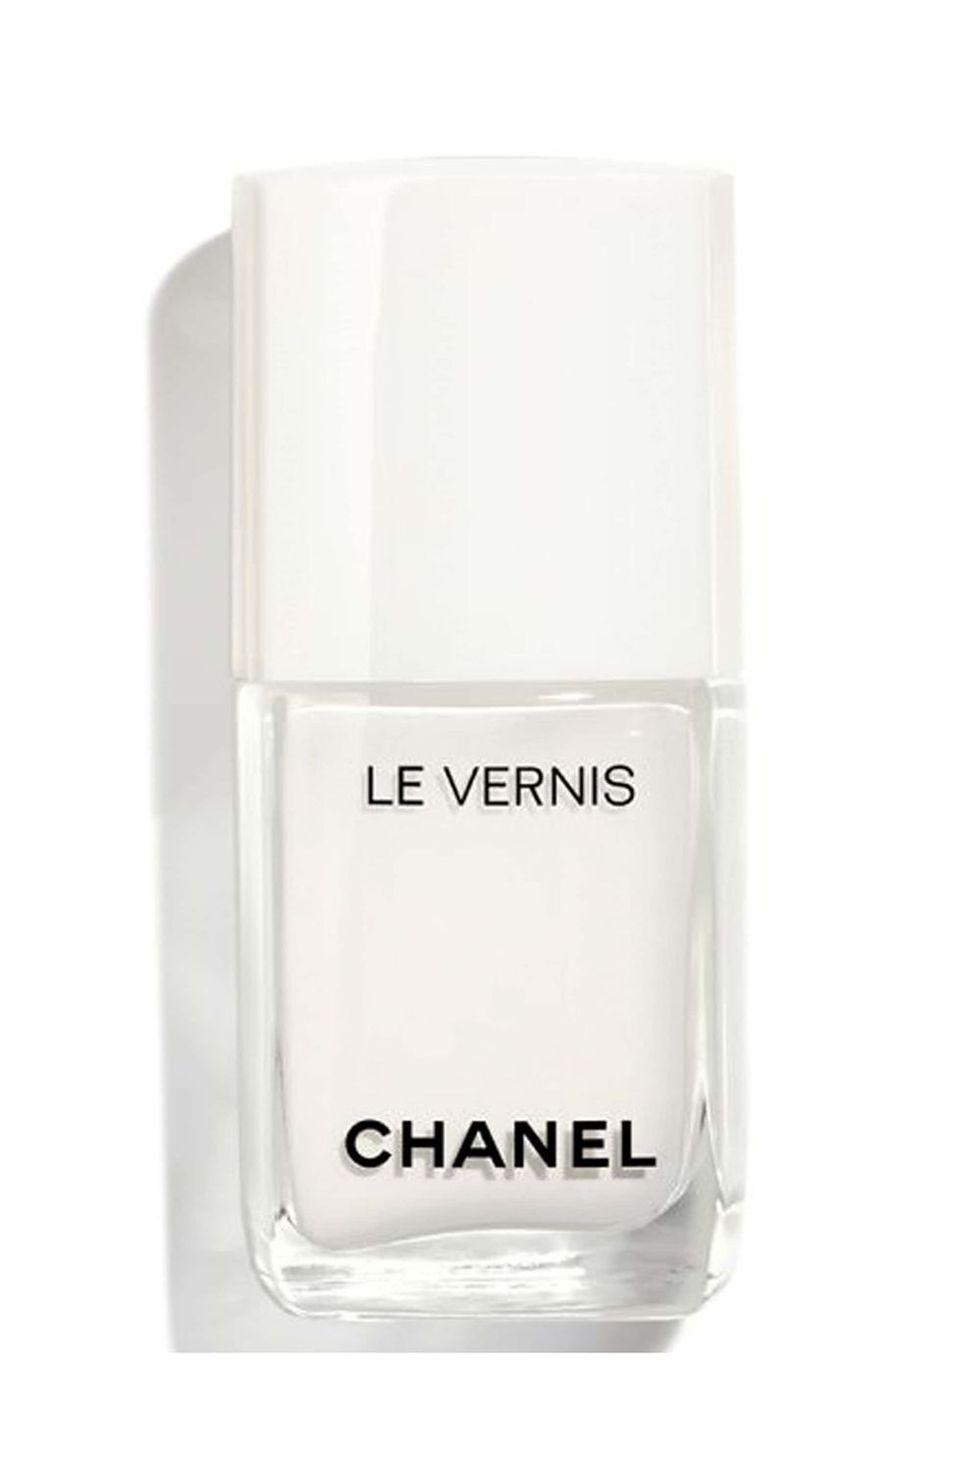 Chanel Le Vernis Longwear Nail Colour in Pure White